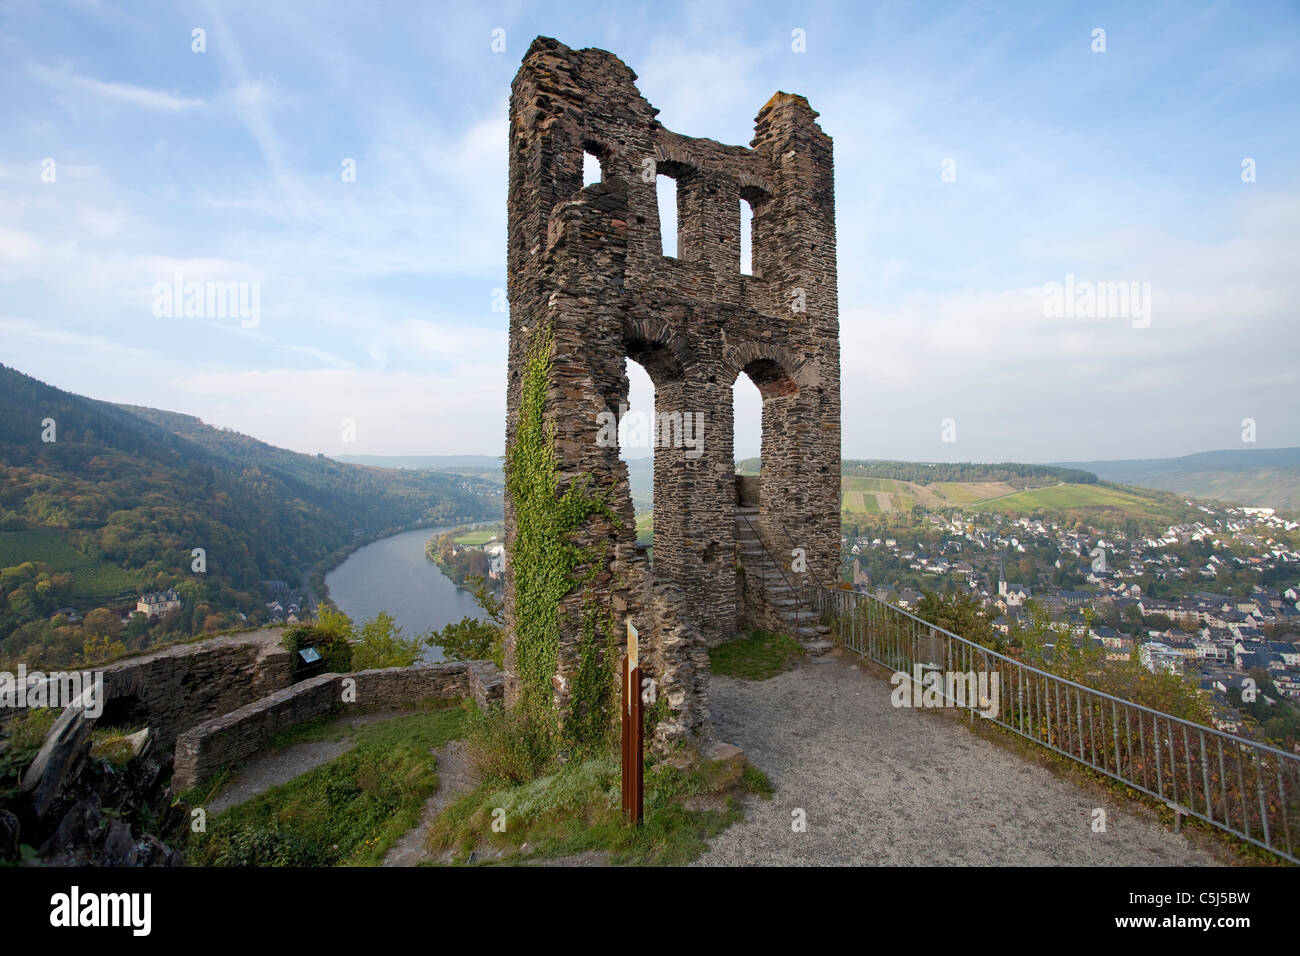 Grevenburg, Ruine ueber Traben-Trarbach, Mosel, Grevenburg, rovina, Greven castello, sopra, Traben-Trarbach, Moselle Foto Stock